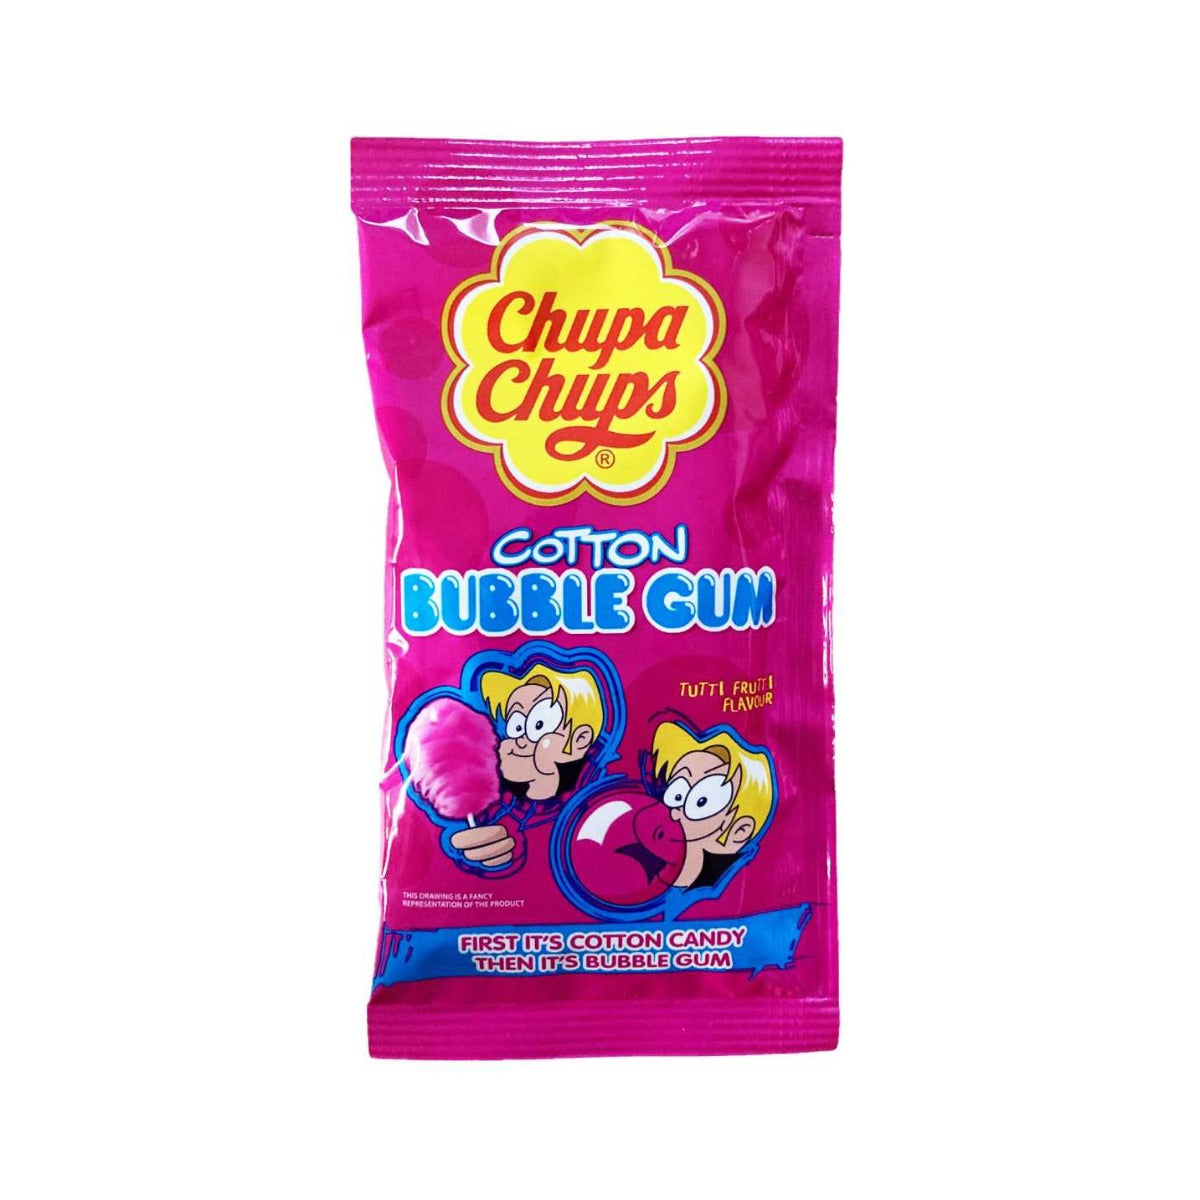 Chupa Chupa Cotton bubble gum צופה צופה מסטיק - טעימים